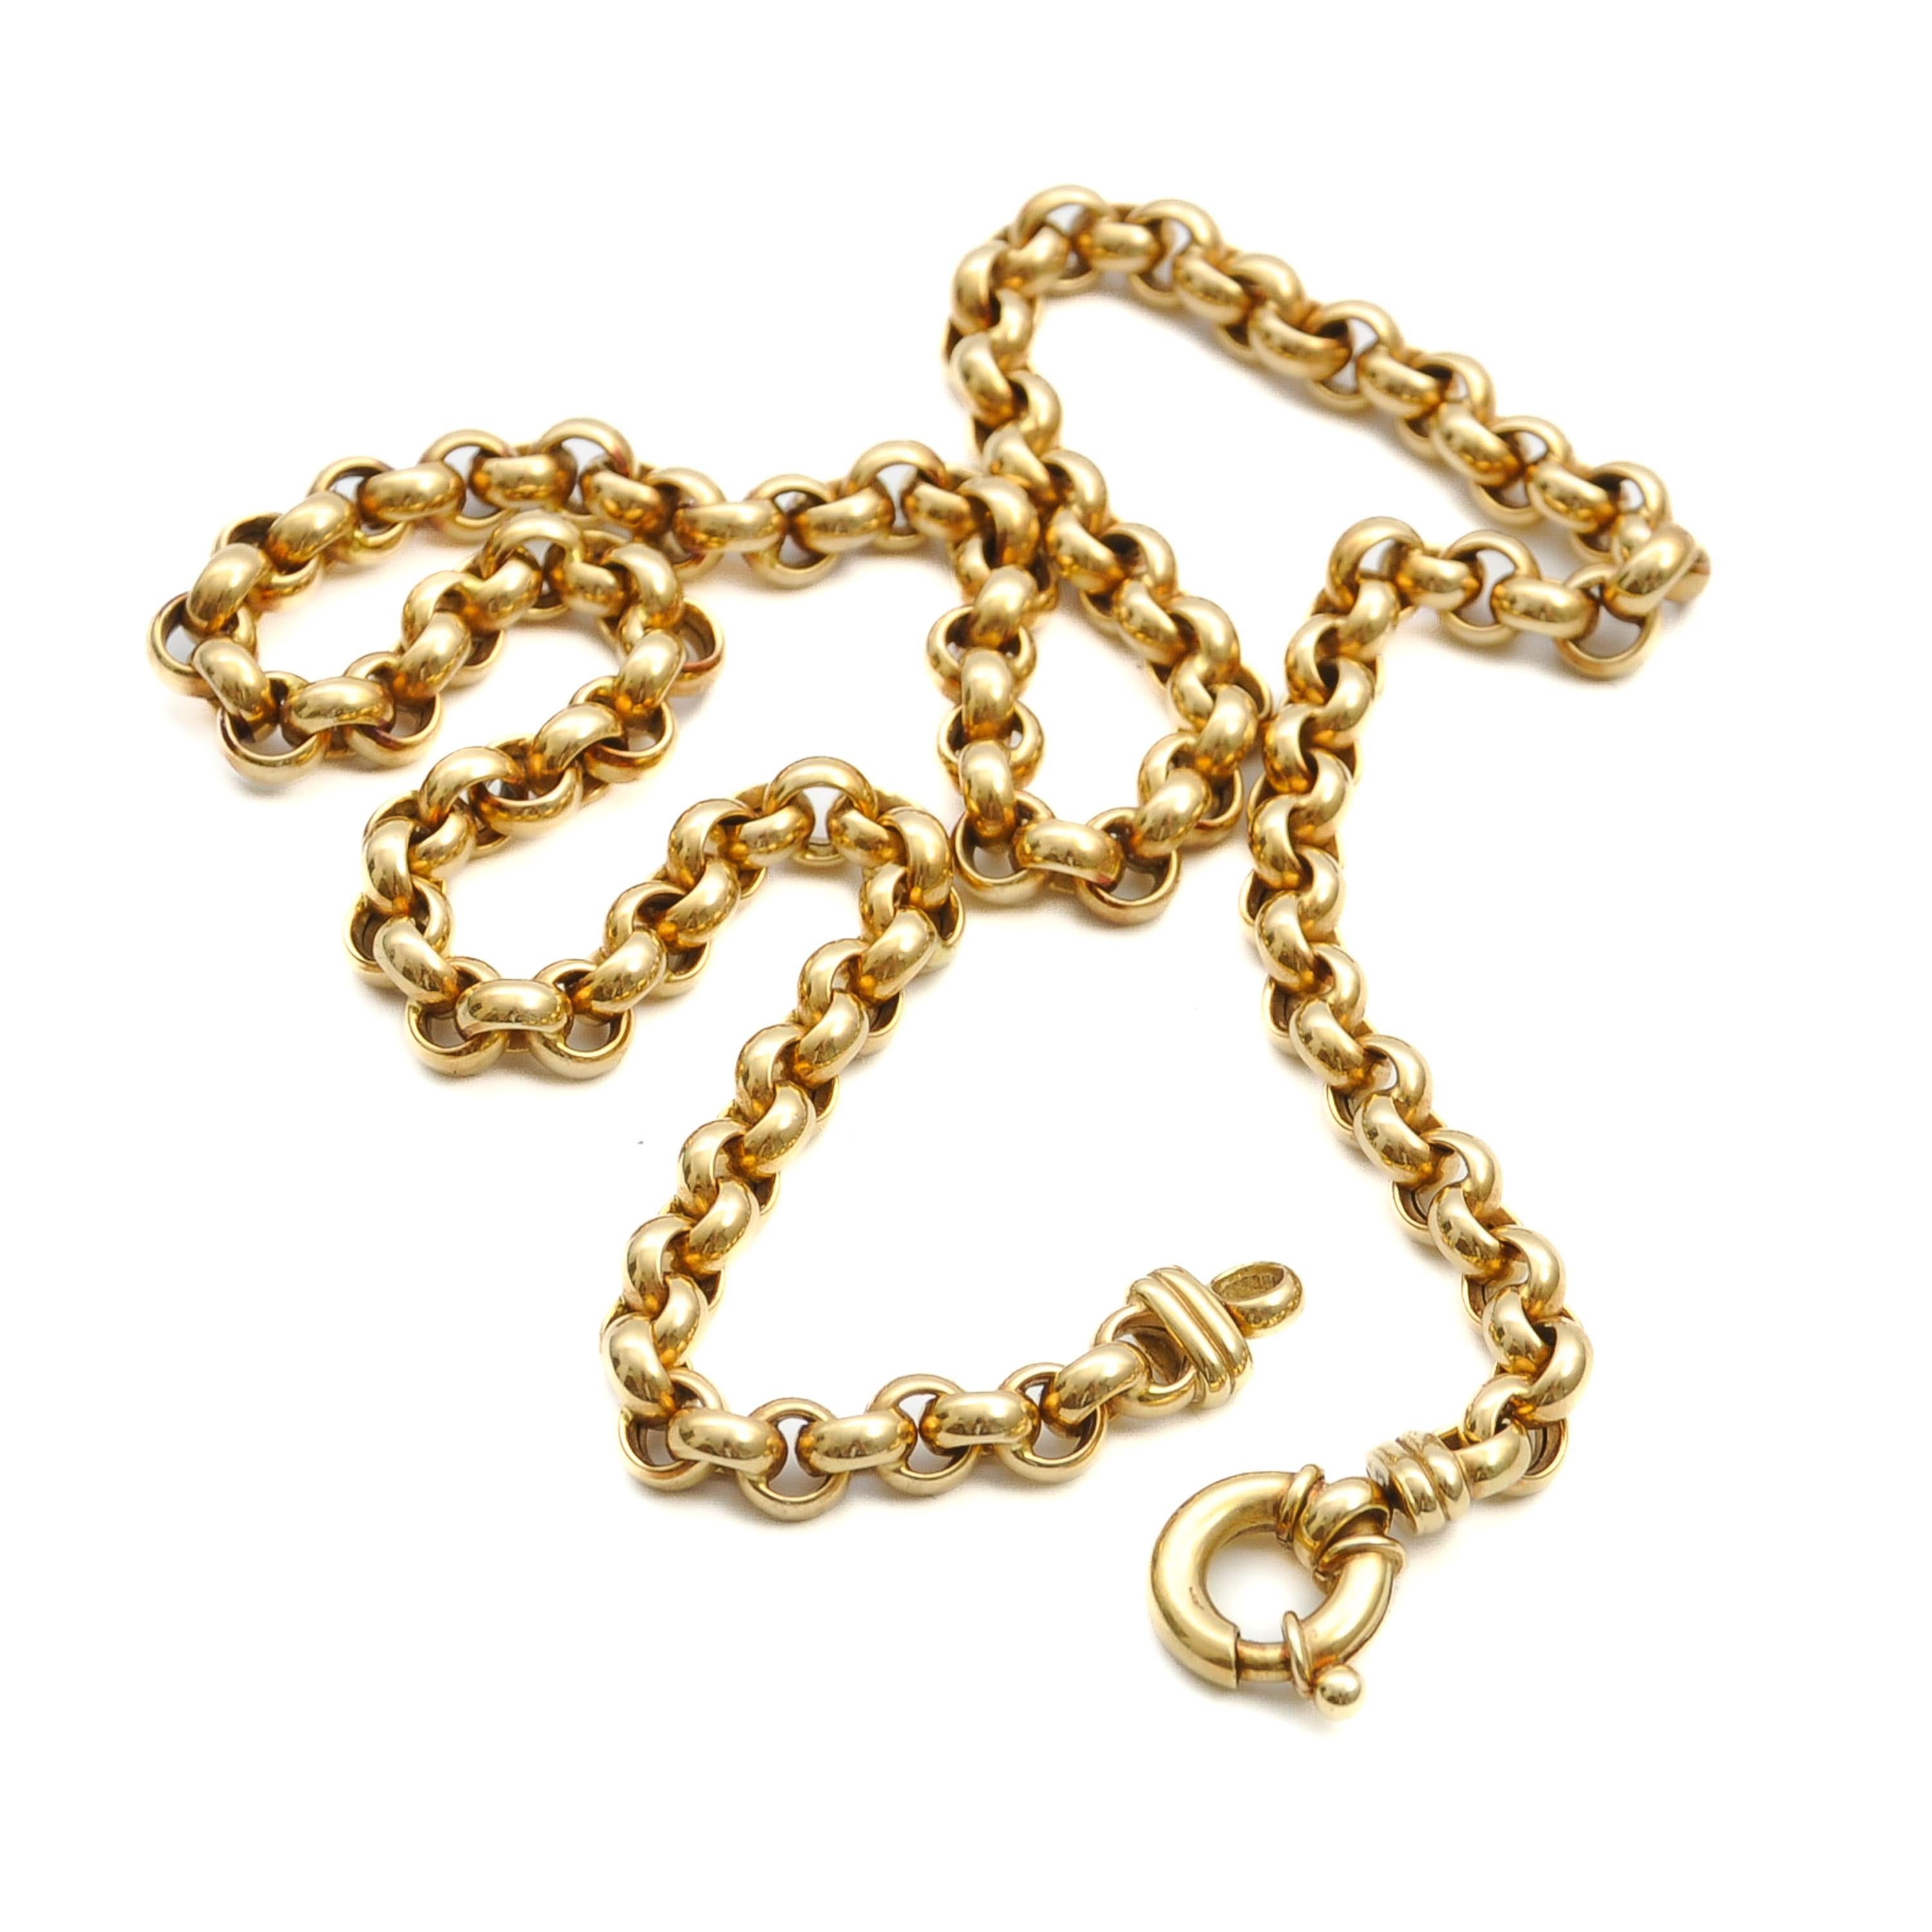 sailor link chain